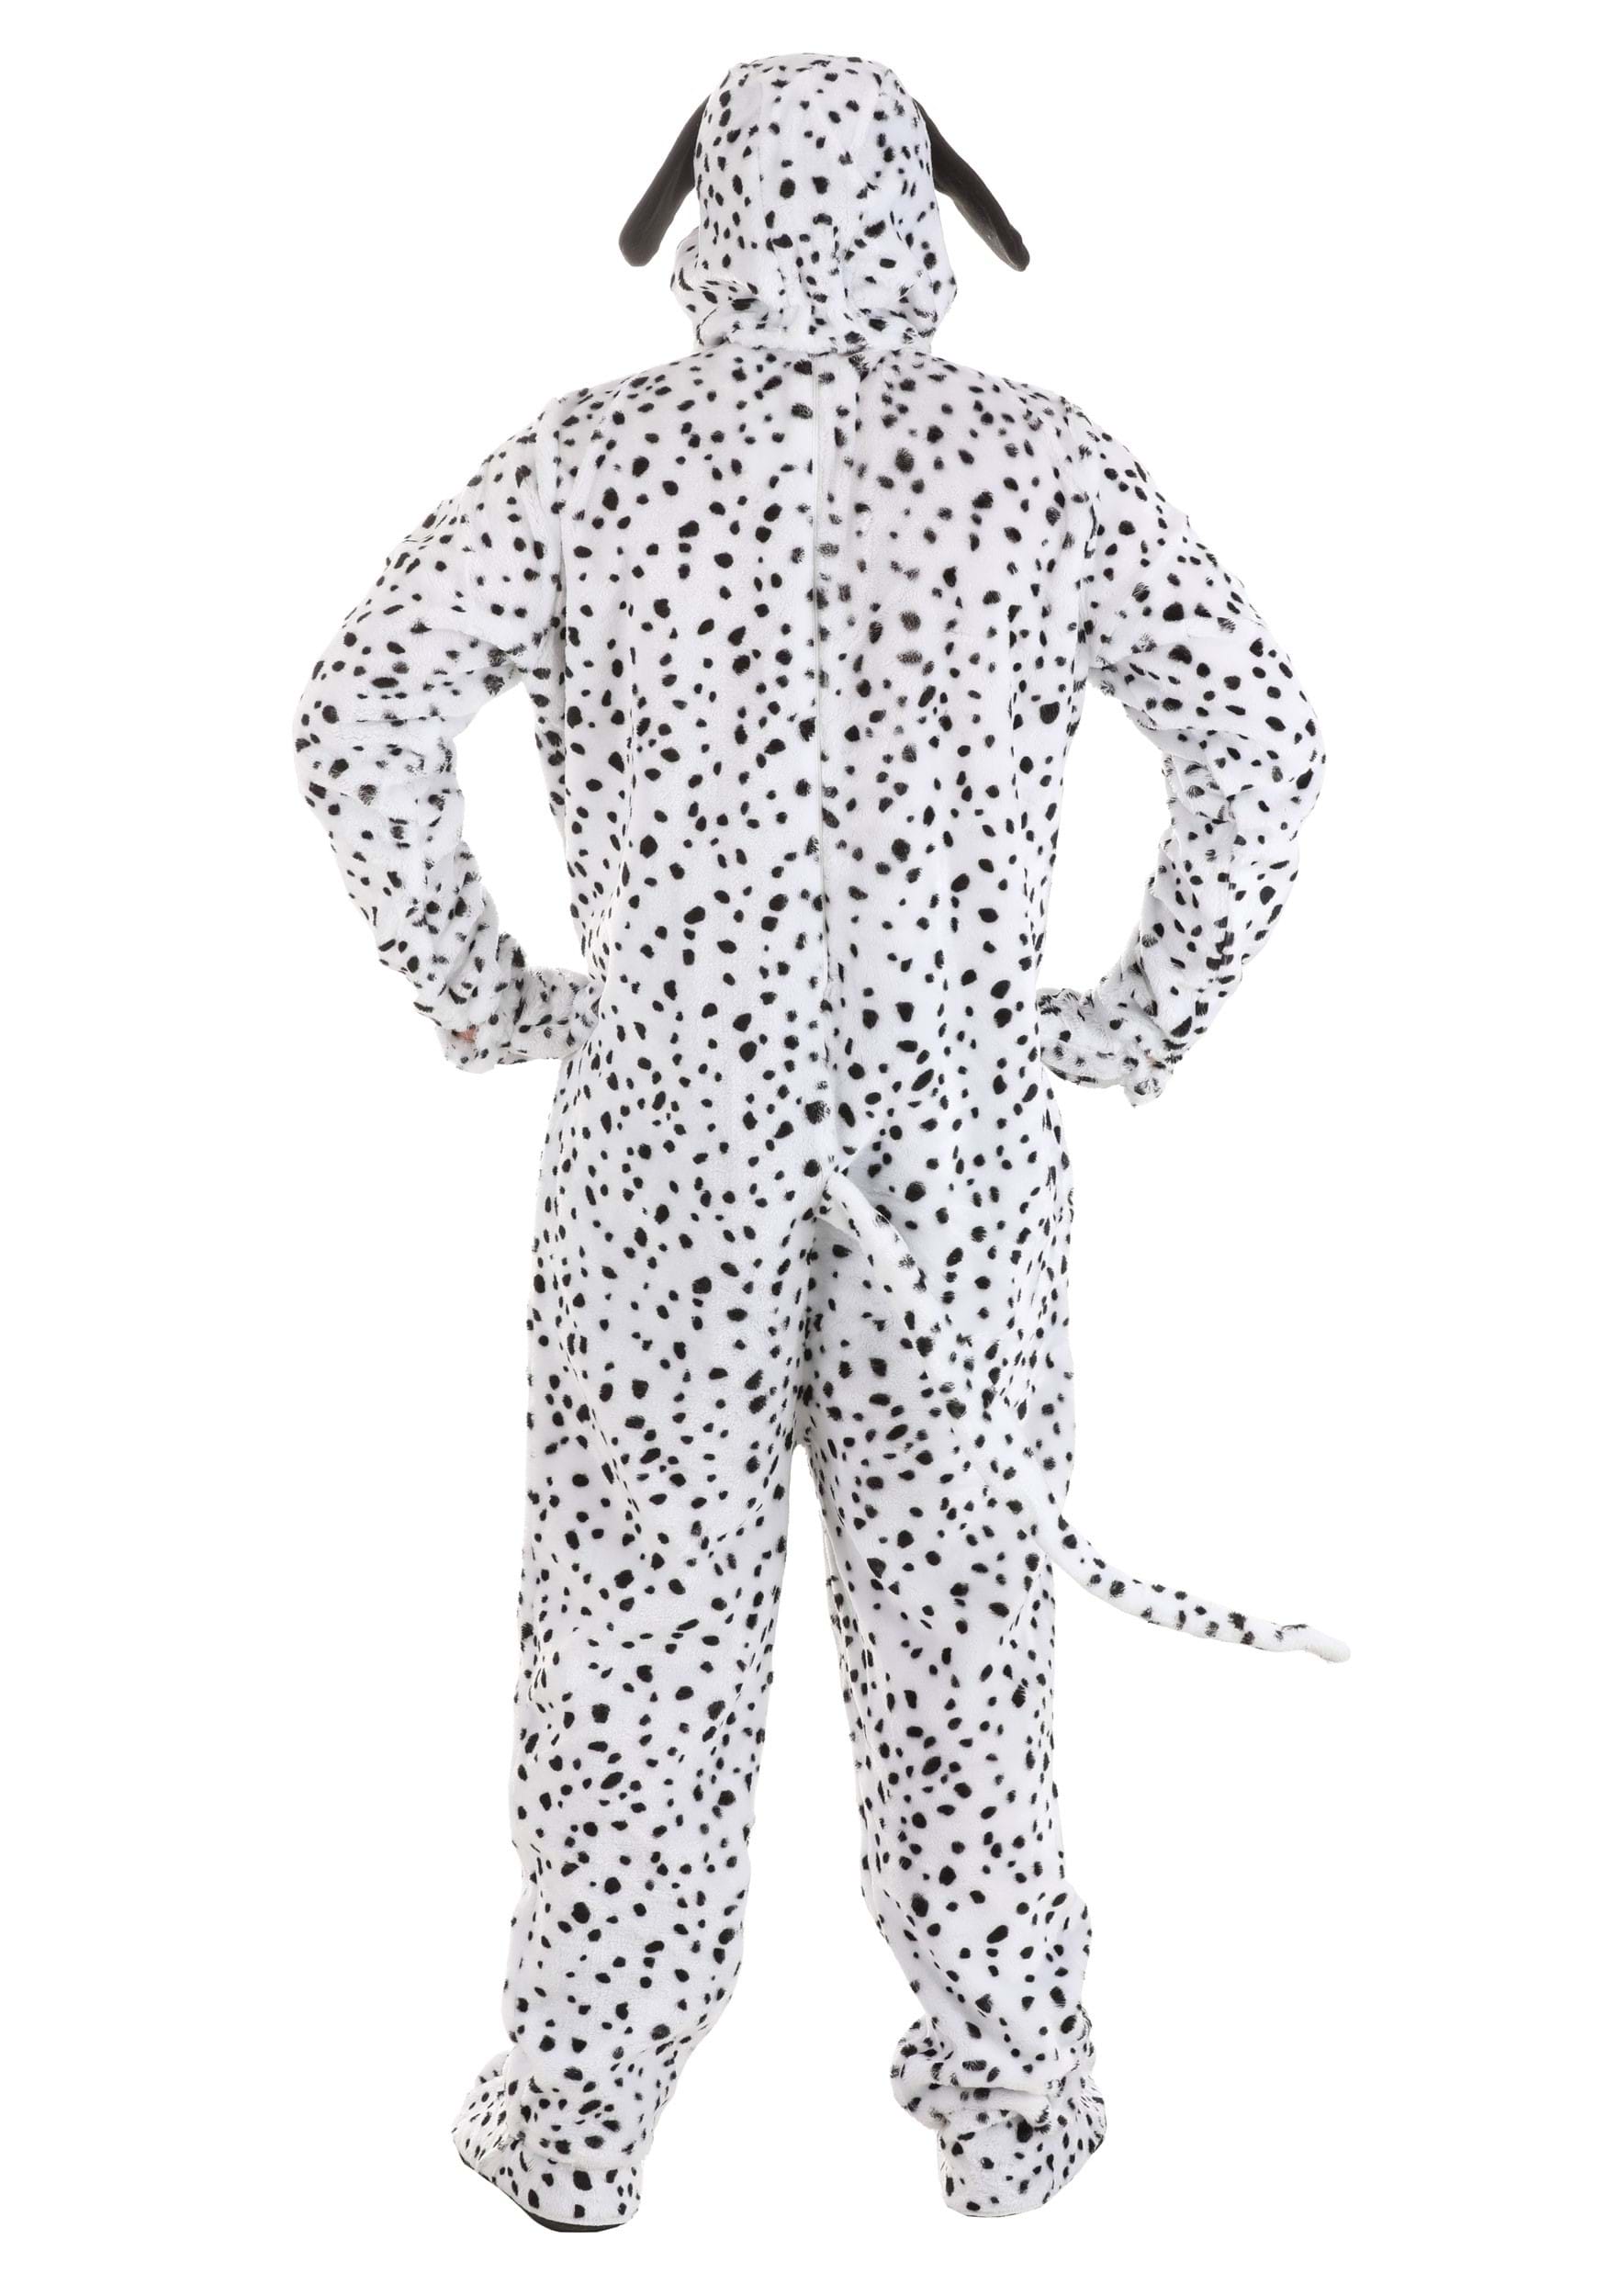 Adult Dalmatian Costume